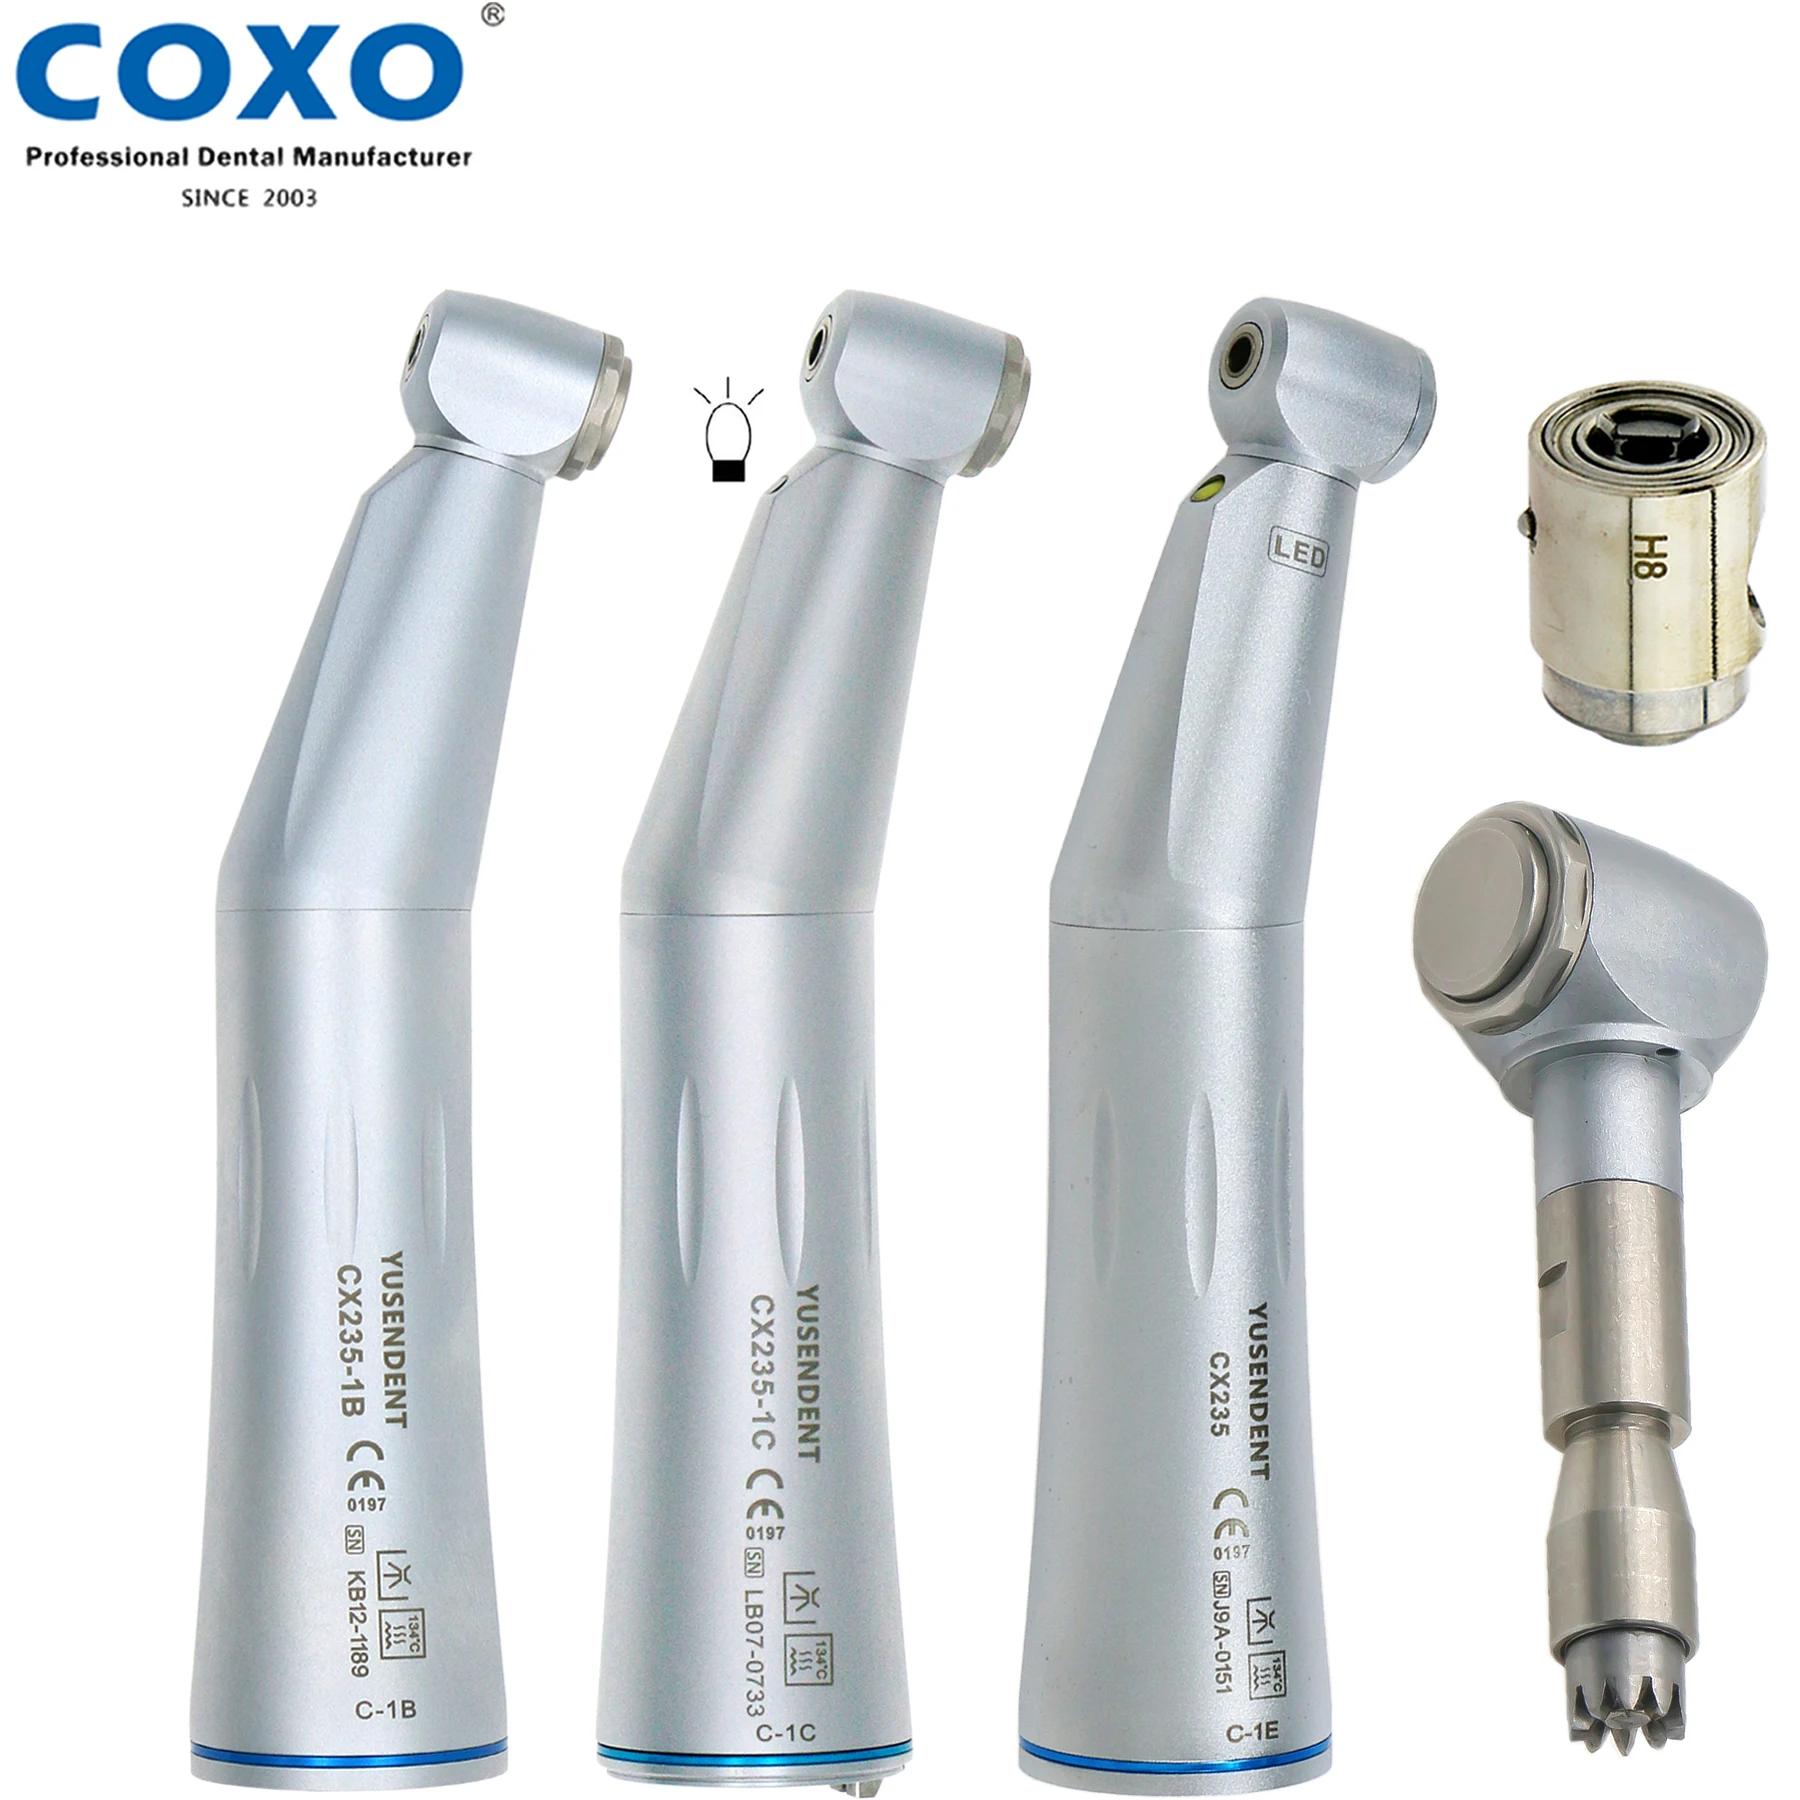 

COXO Dental LED Fiber Optic Low Speed Ceramic Bearings Contra Angle Turbine Handpiece Spare Cartridge/Head CX235-1B/1C/1E